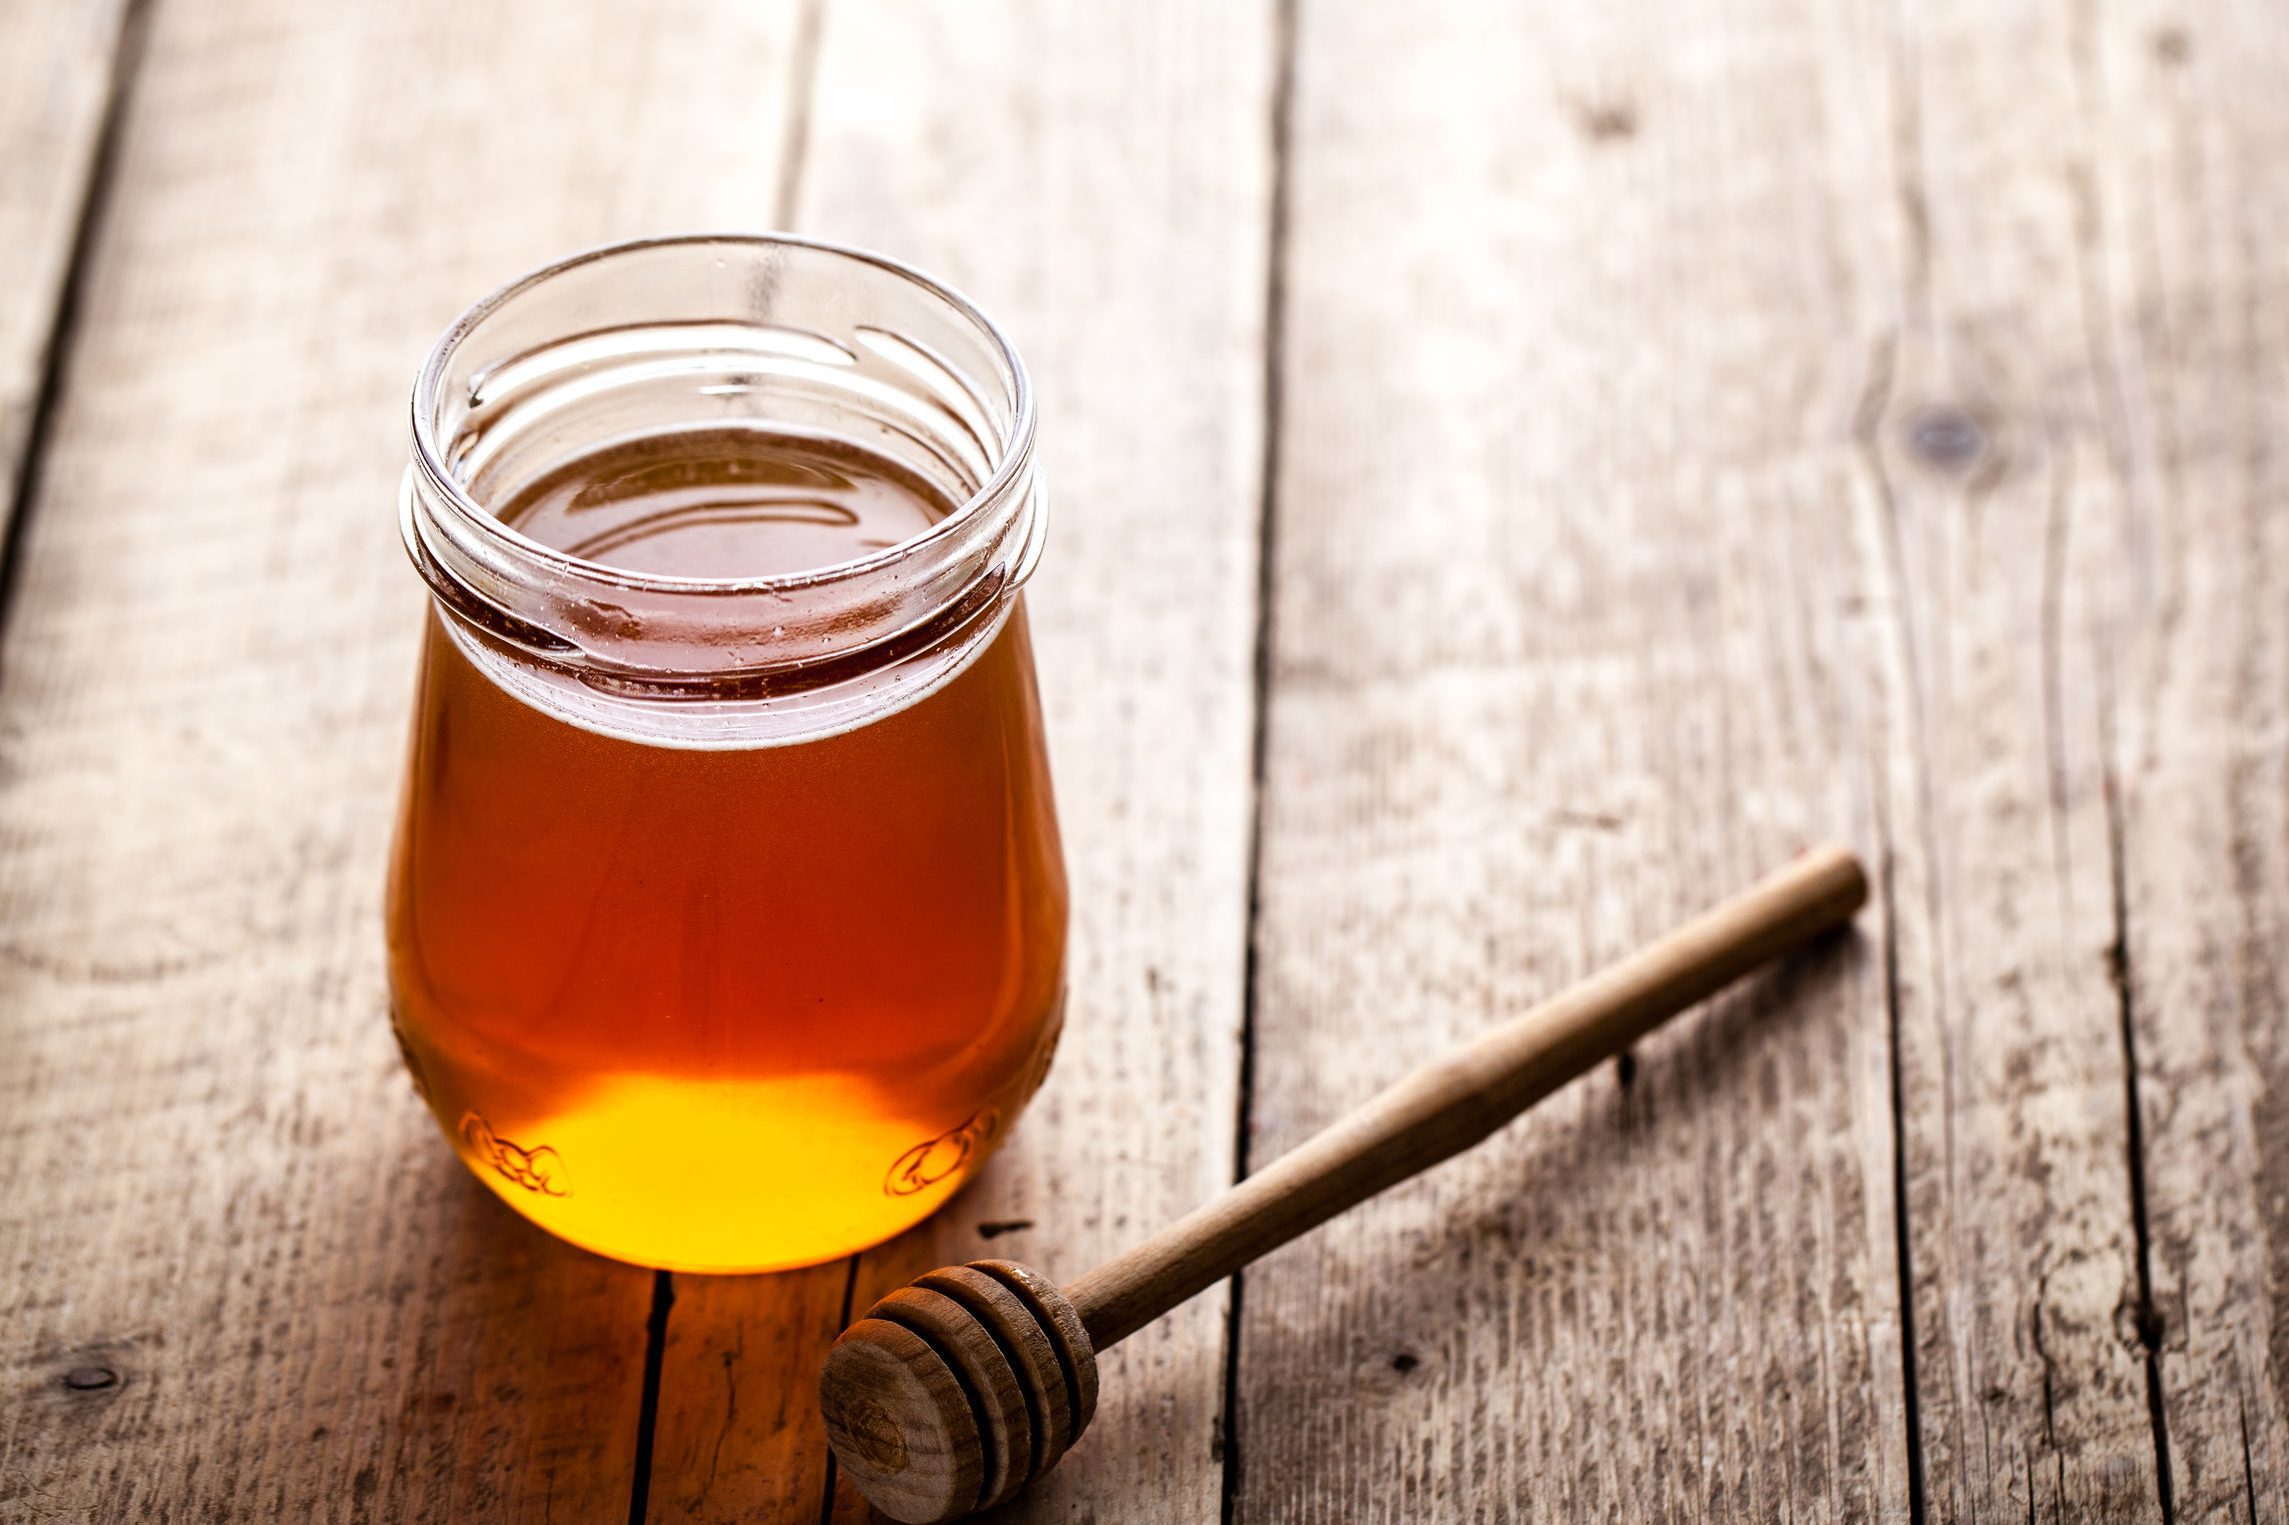 antibacterial and anti-inflammatory properties of honey